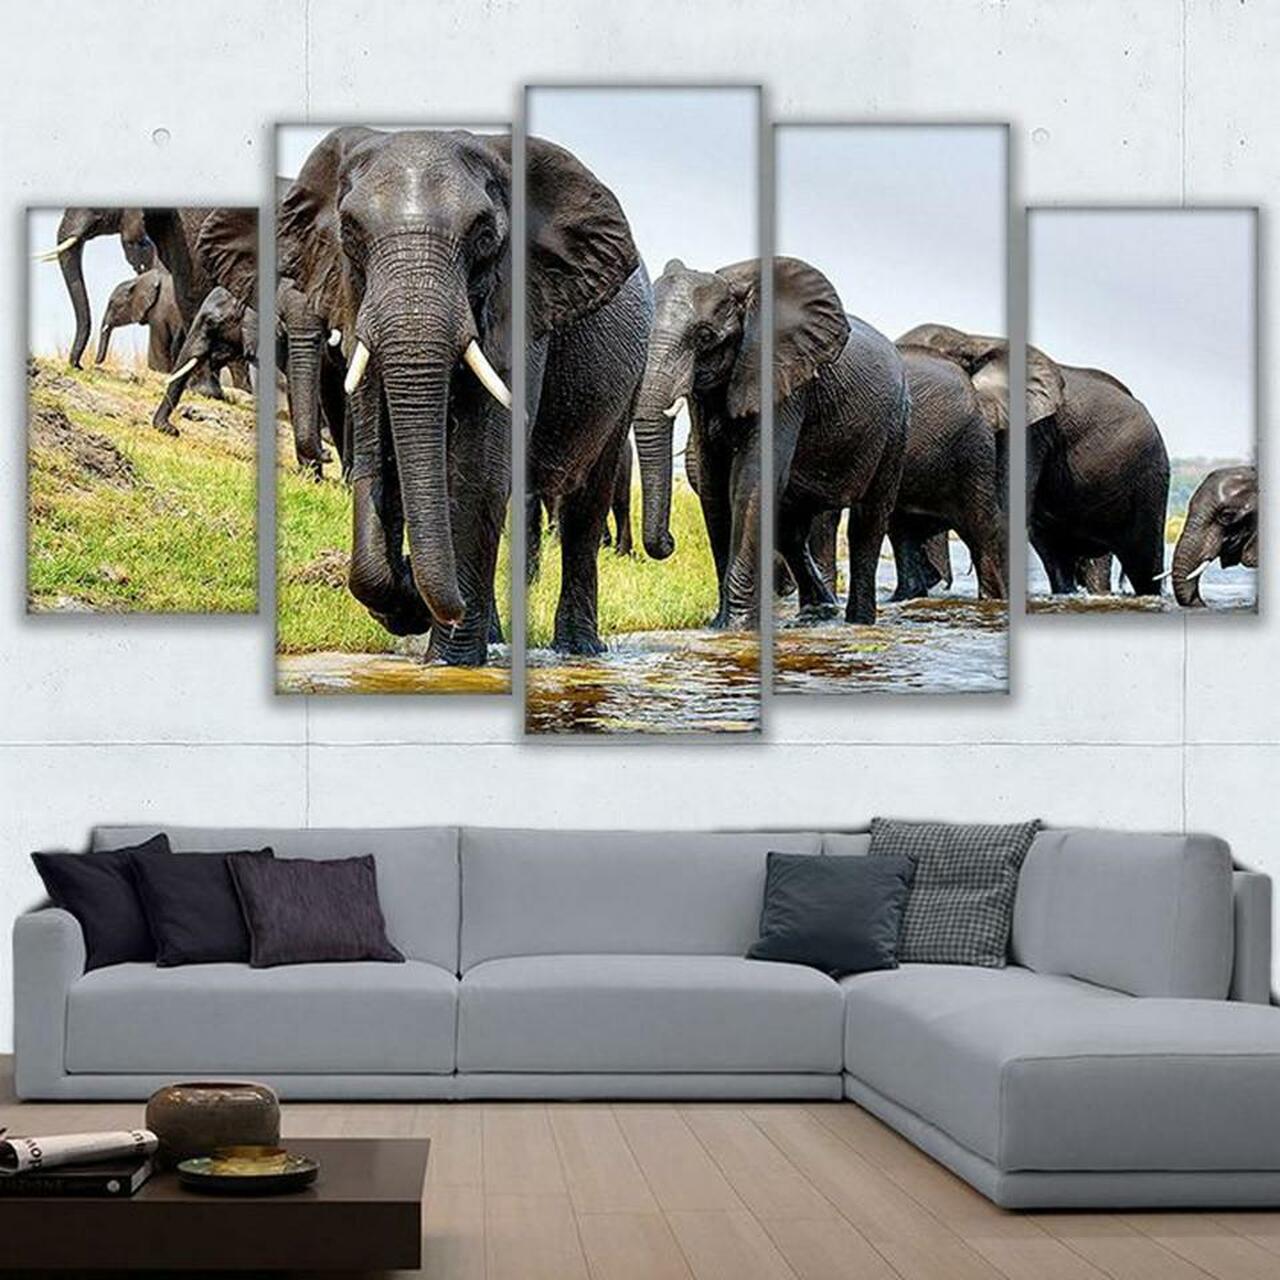 Elephant Parade 5 Piece Canvas Art Wall Decor